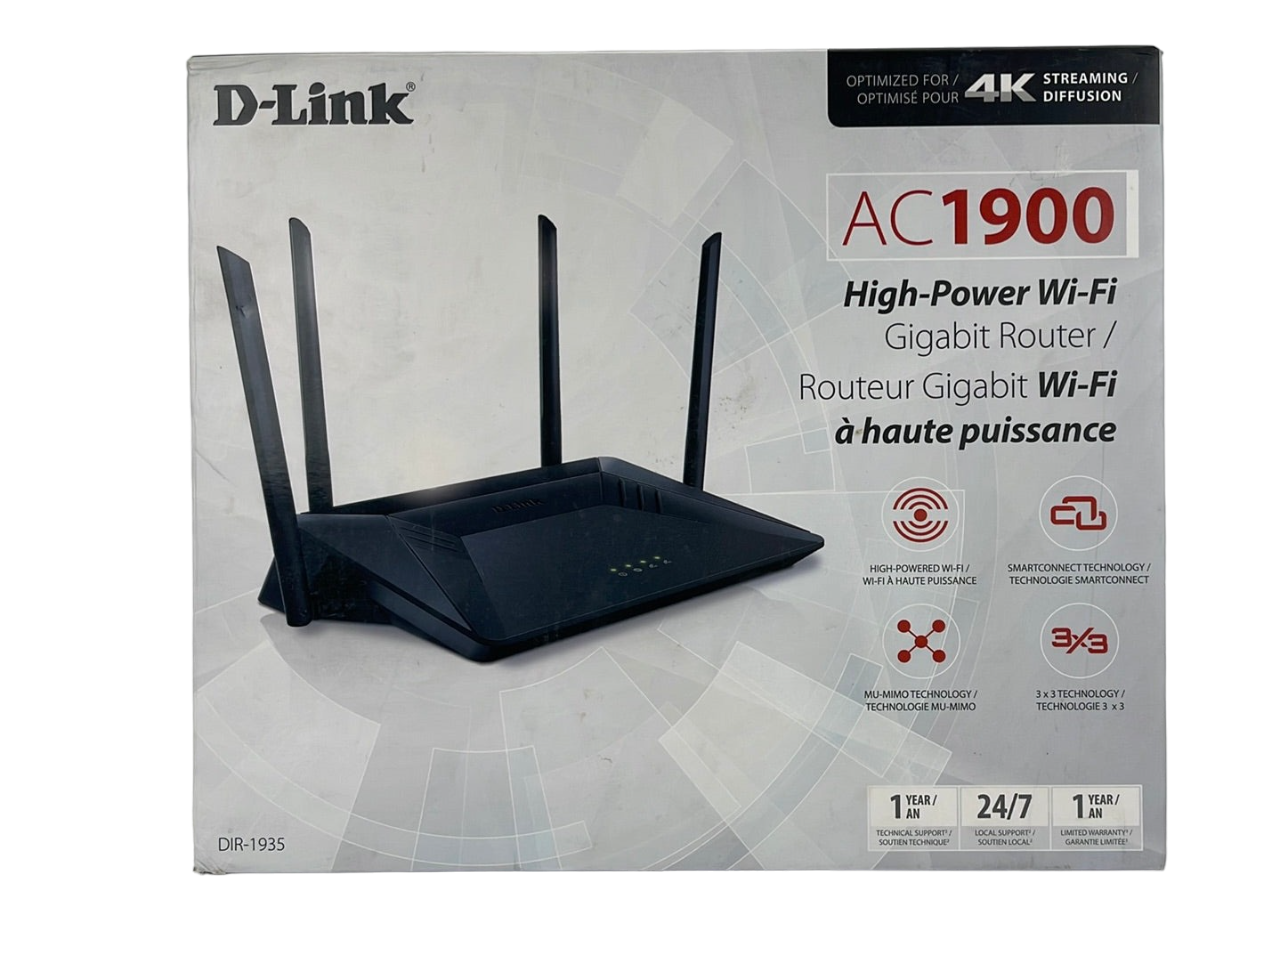 D-Link AC1900 High-Power Wi-Fi Gigabit Router, Dual Band, MU-MIMO, QoS, SmartConnect, 3X3 Wireless, 4 Gigabit Ports, WiFi Coverage, 4 High-Power External Antennas Plus High-Power Amplifier